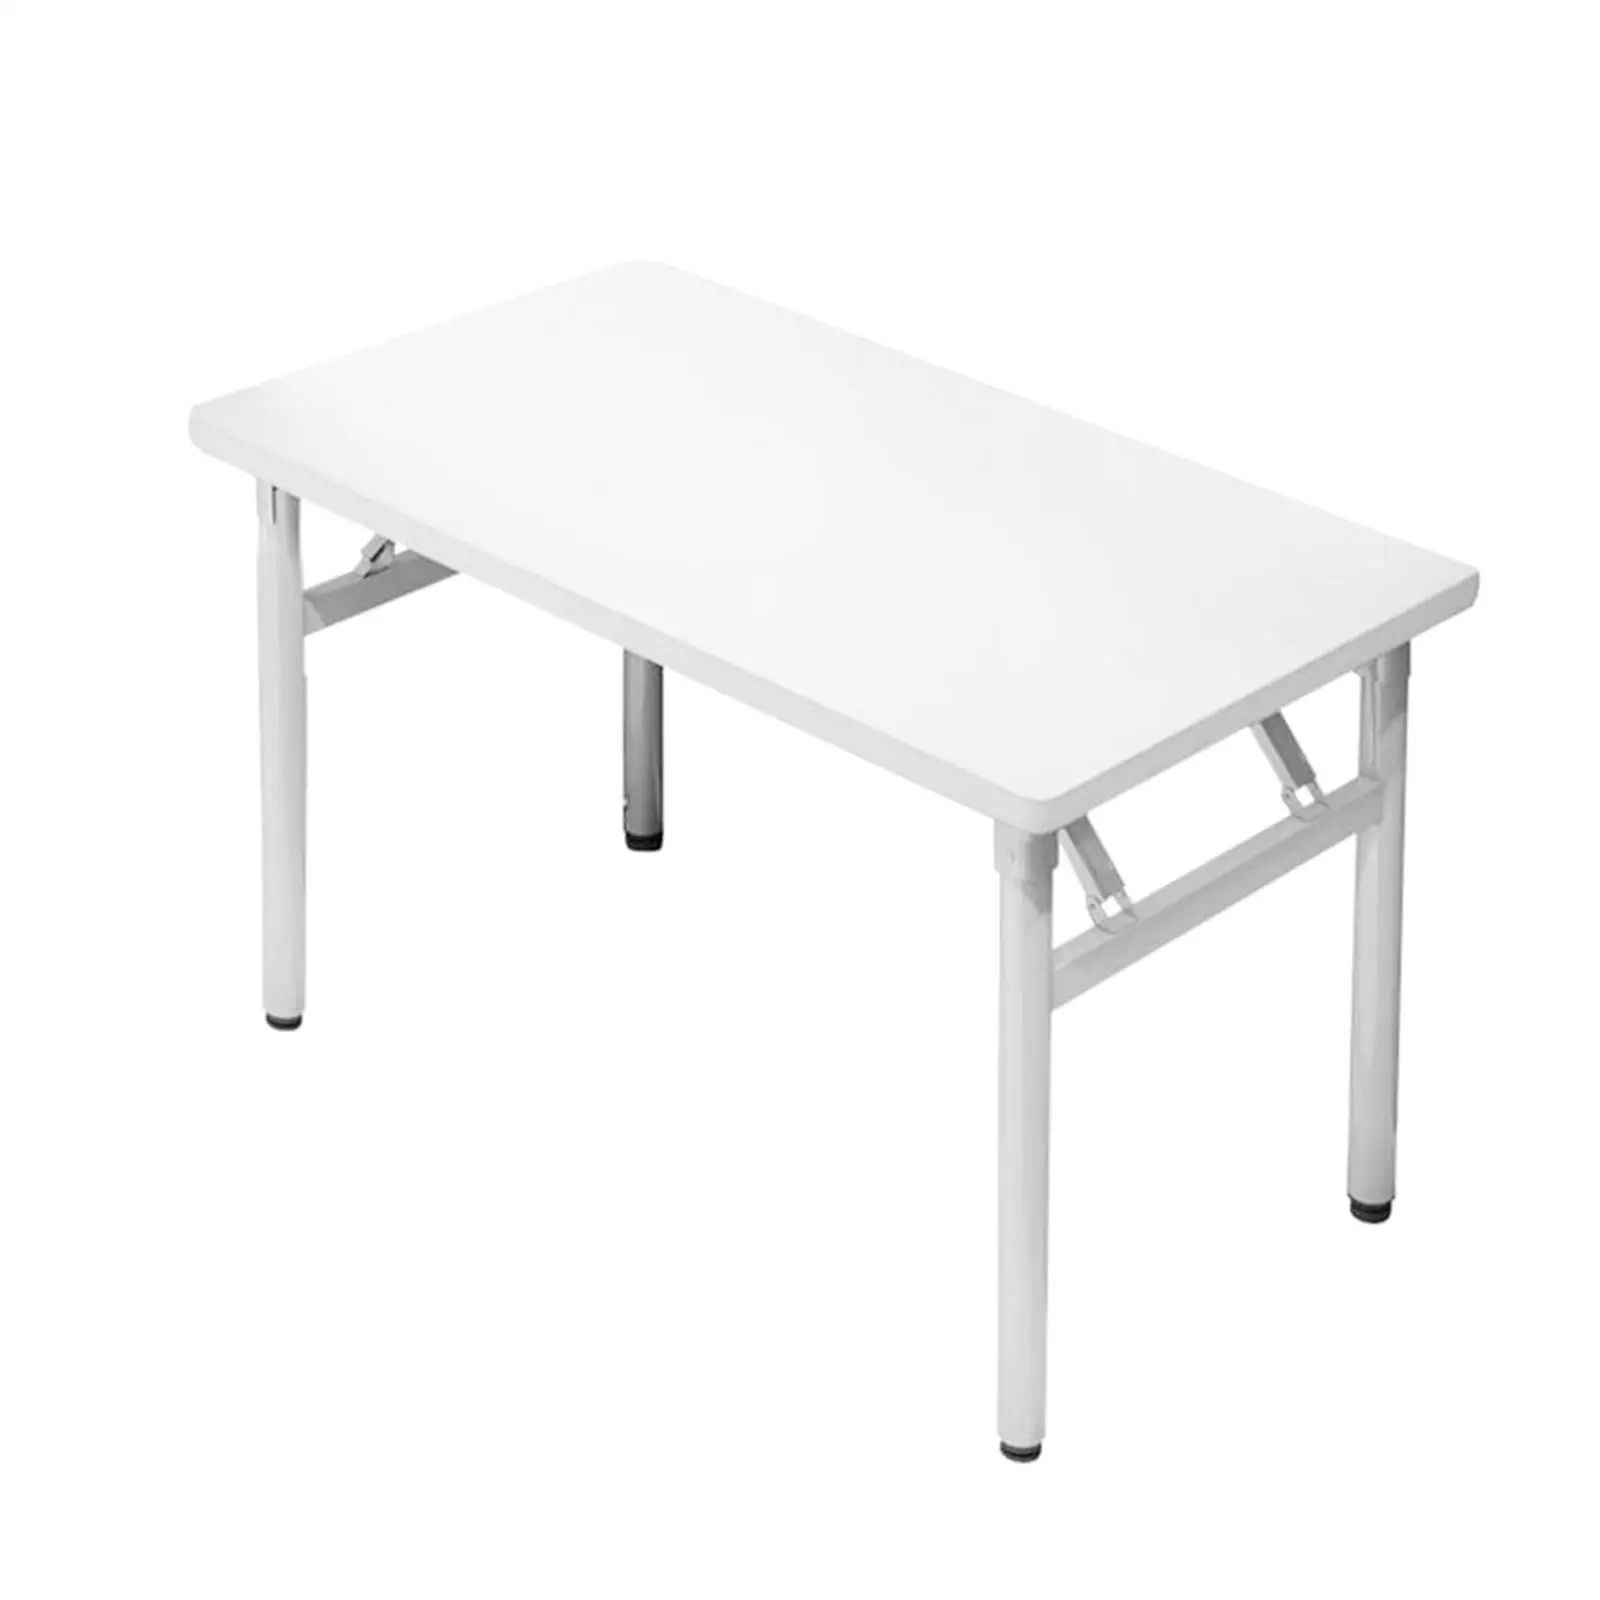 120Cmx60cm Folding Table Heavy Duty Laptop Tea Coffee Picnic Table Desk Camping Table Dining Table for Indoor Outdoor Picnic RV